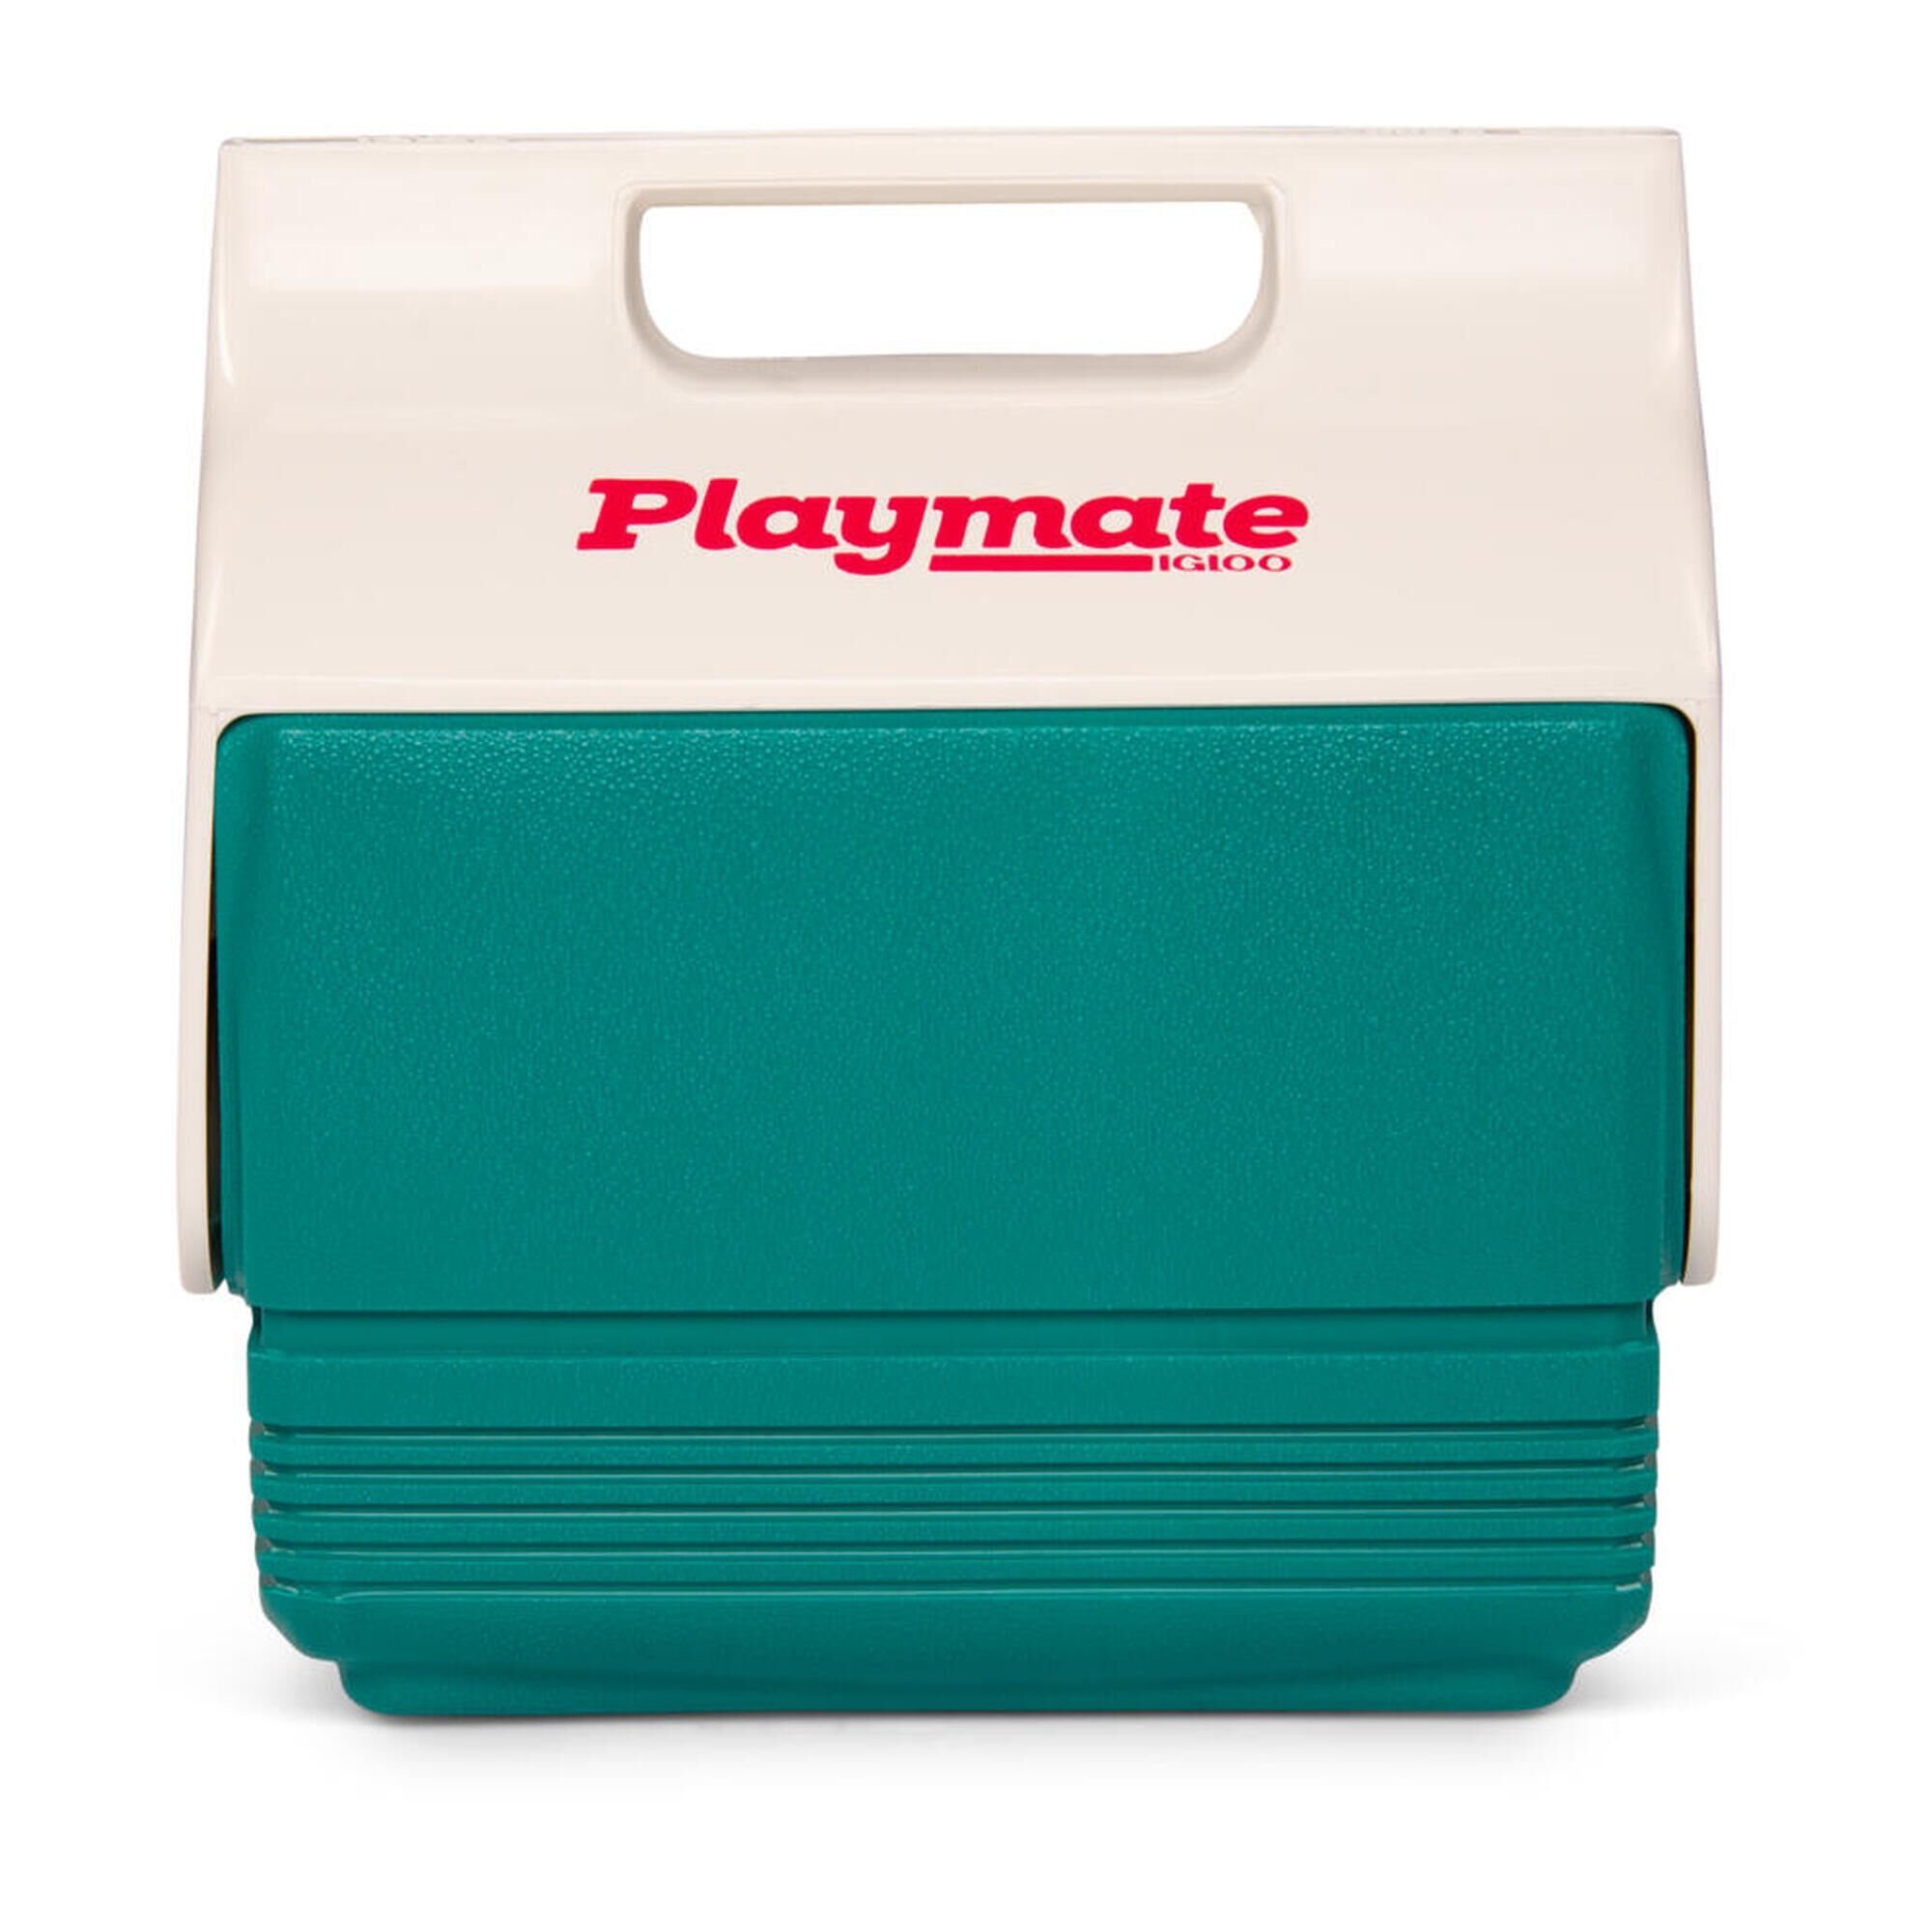 IGLOO IGLOO Retro Playmate Mini Cooler